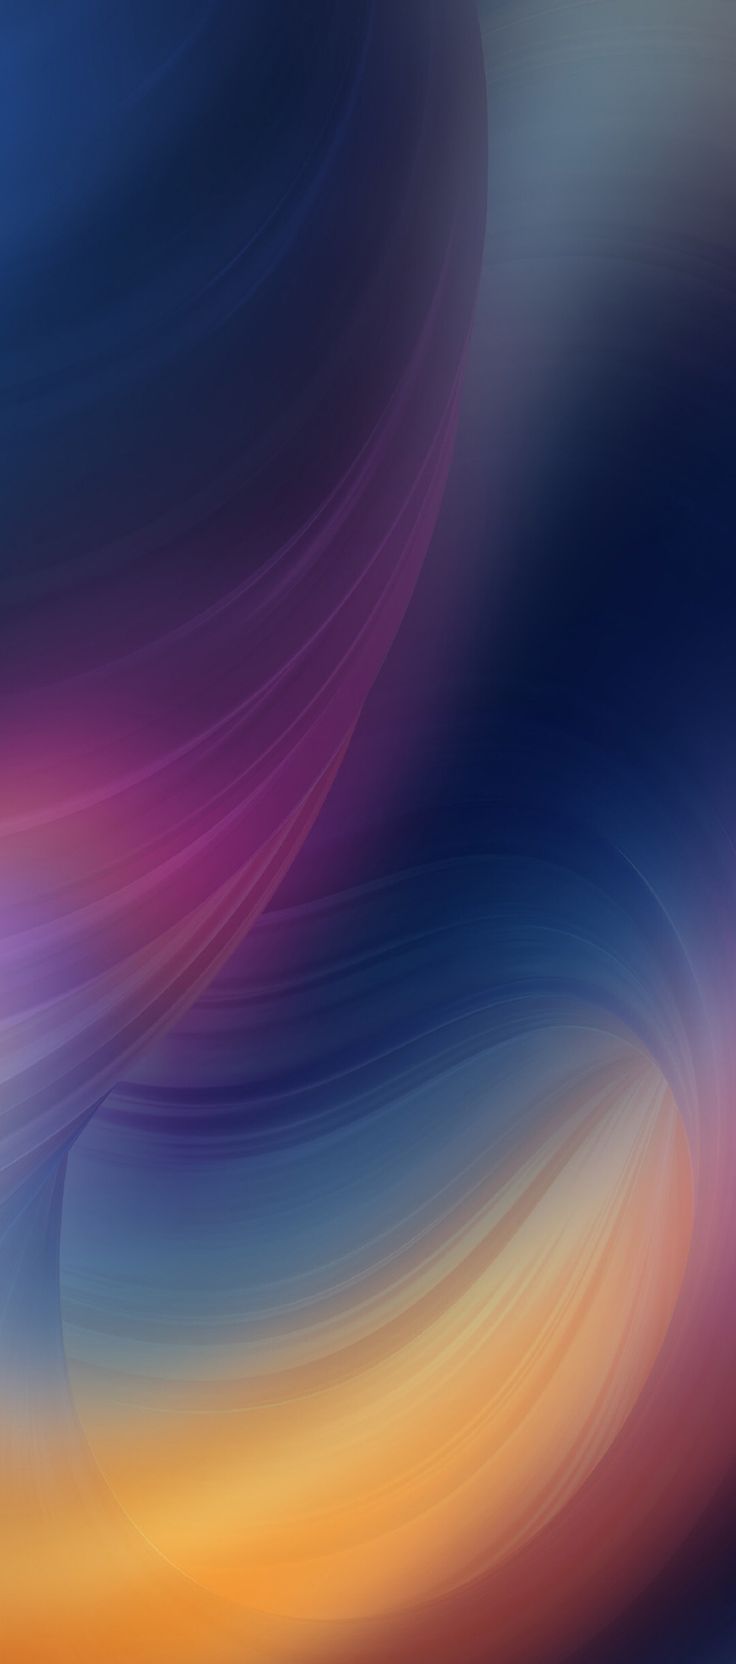 iPhone XS wallpaper, iOS iPhone X, purple, blue, clean